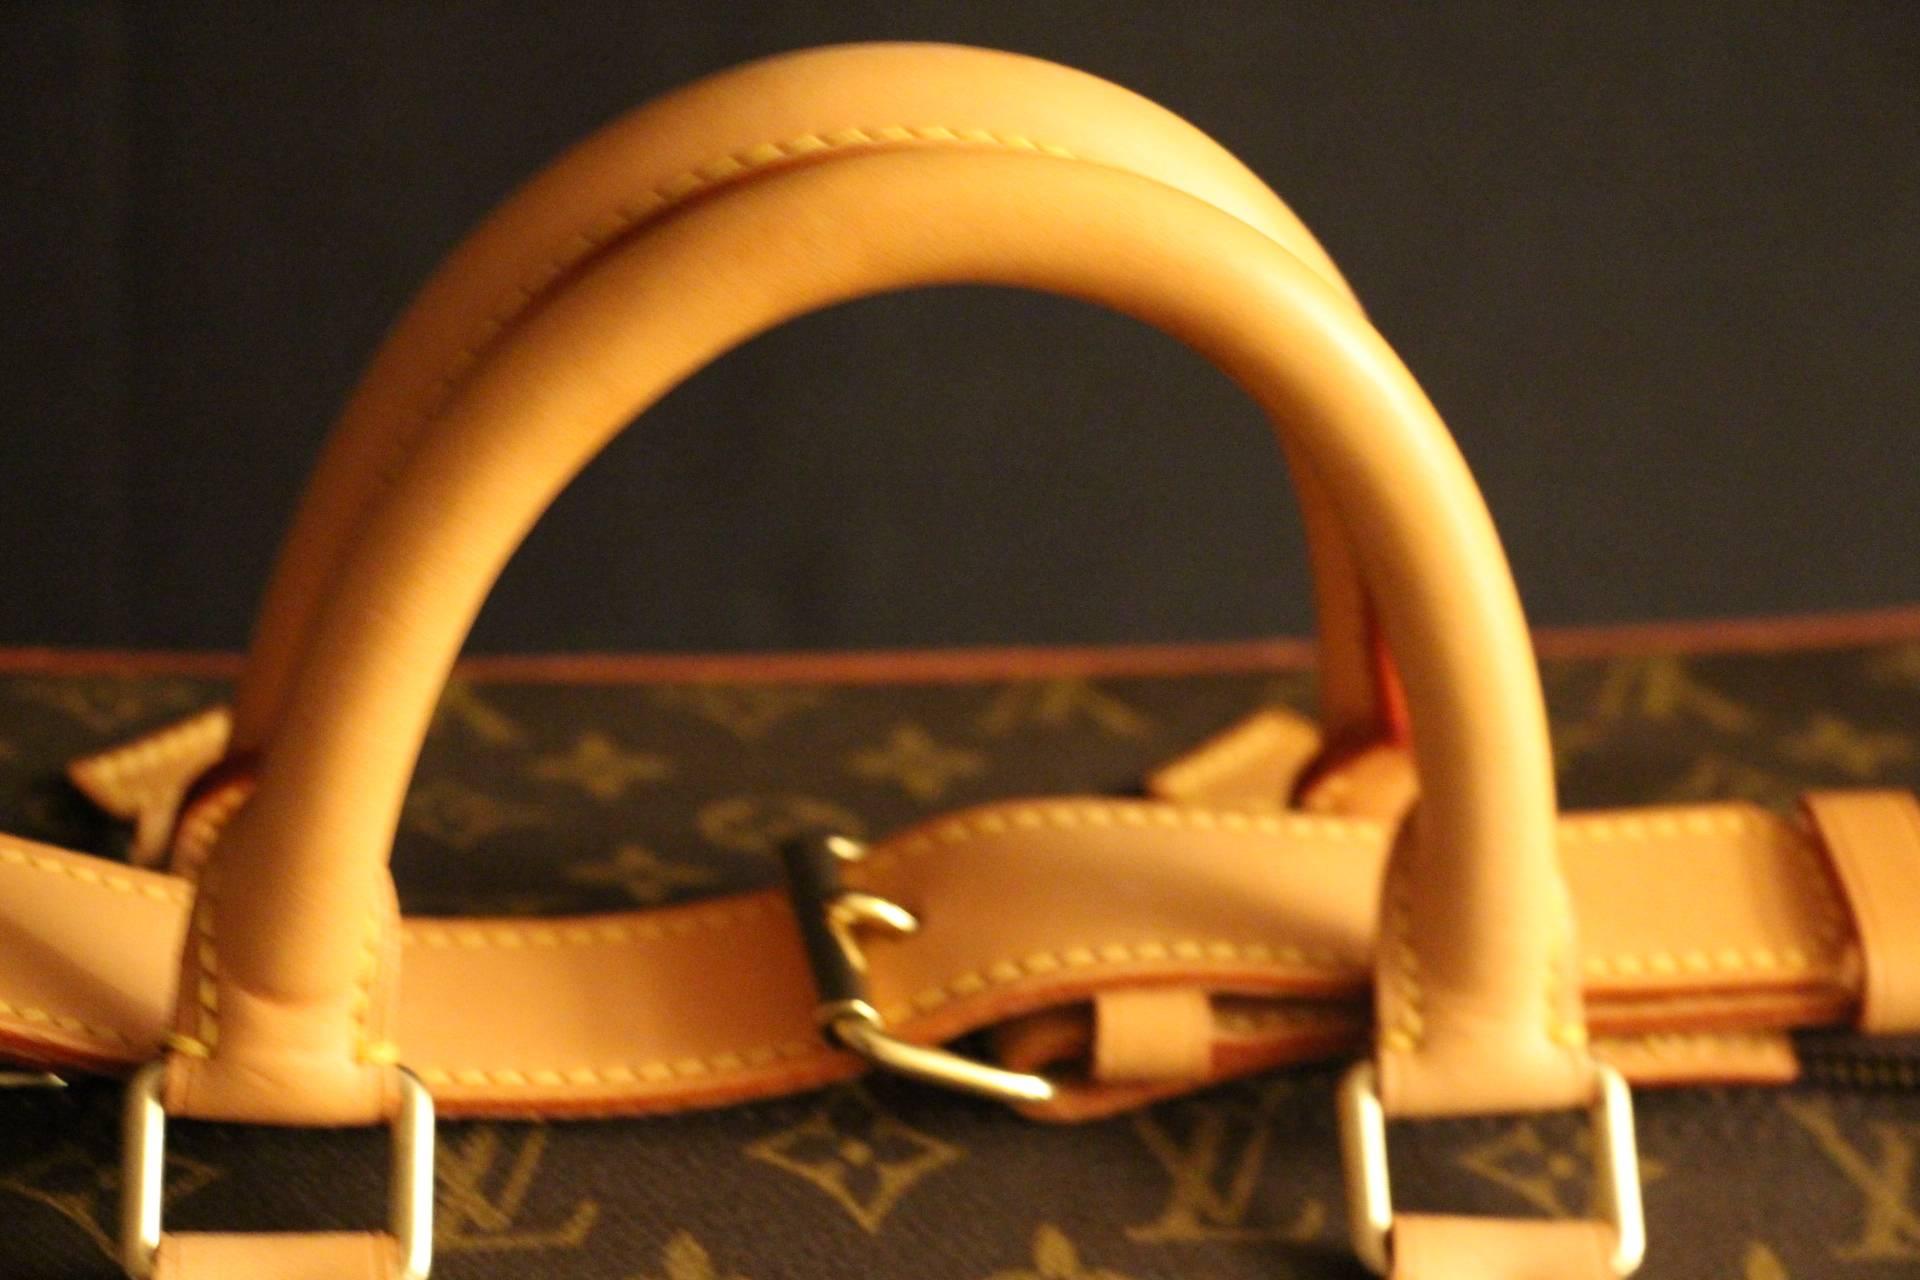 French Large Louis Vuitton Travel Bag 50